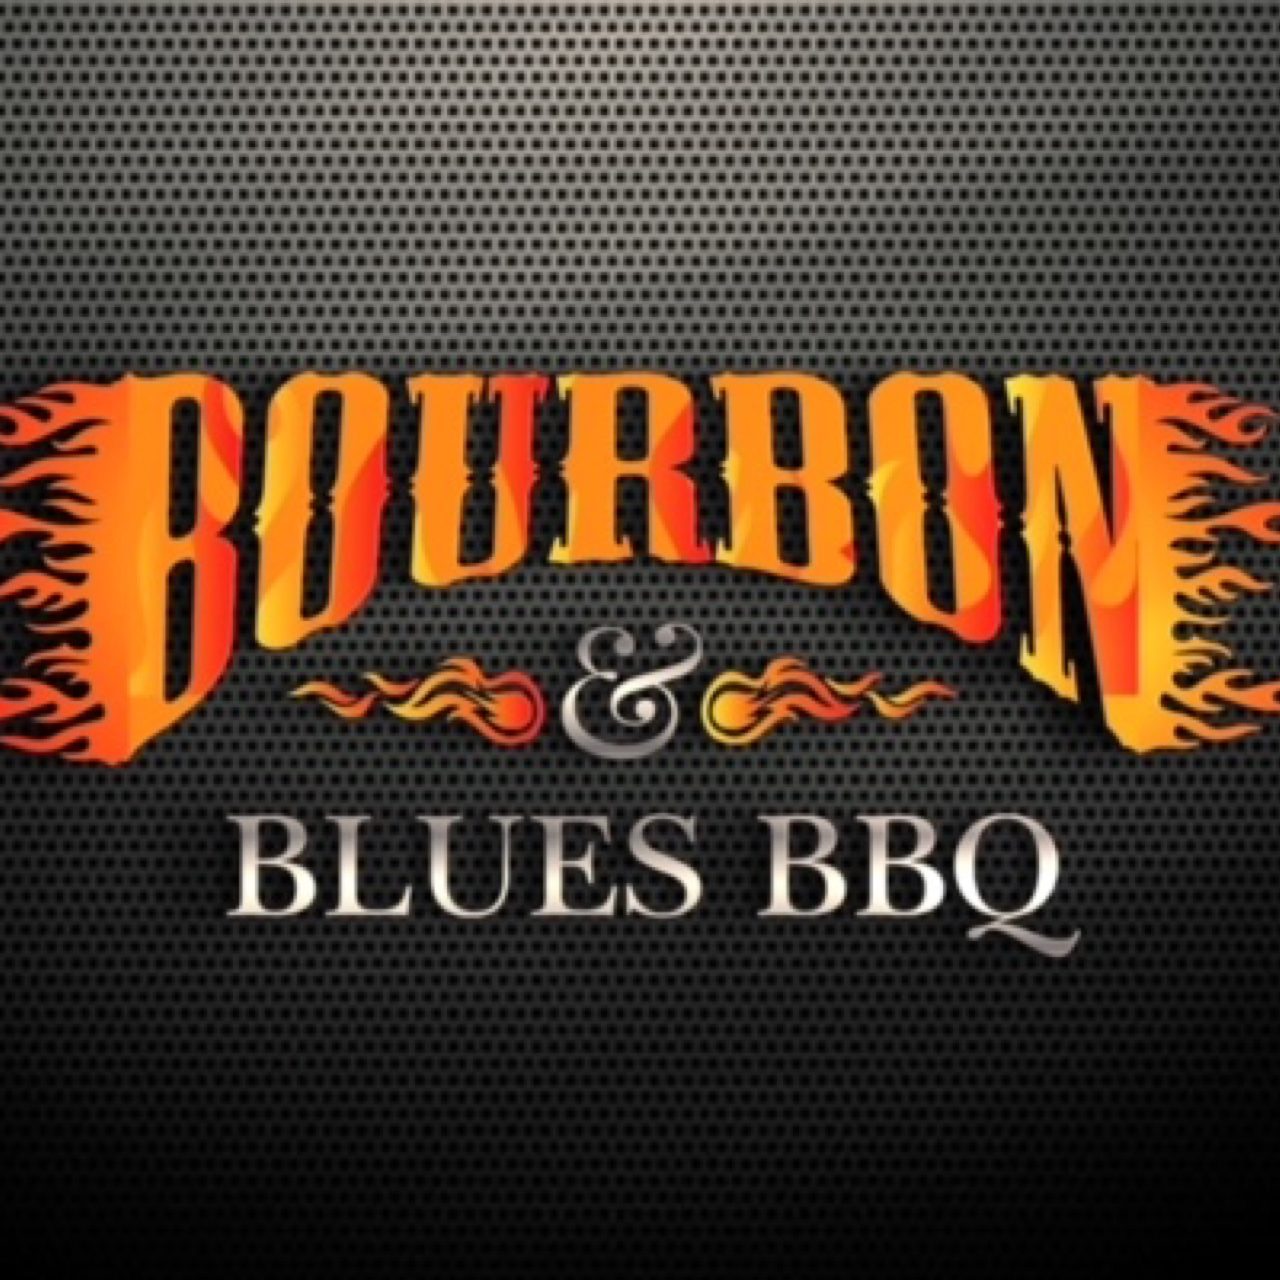 Bourbon & Blues BBQ